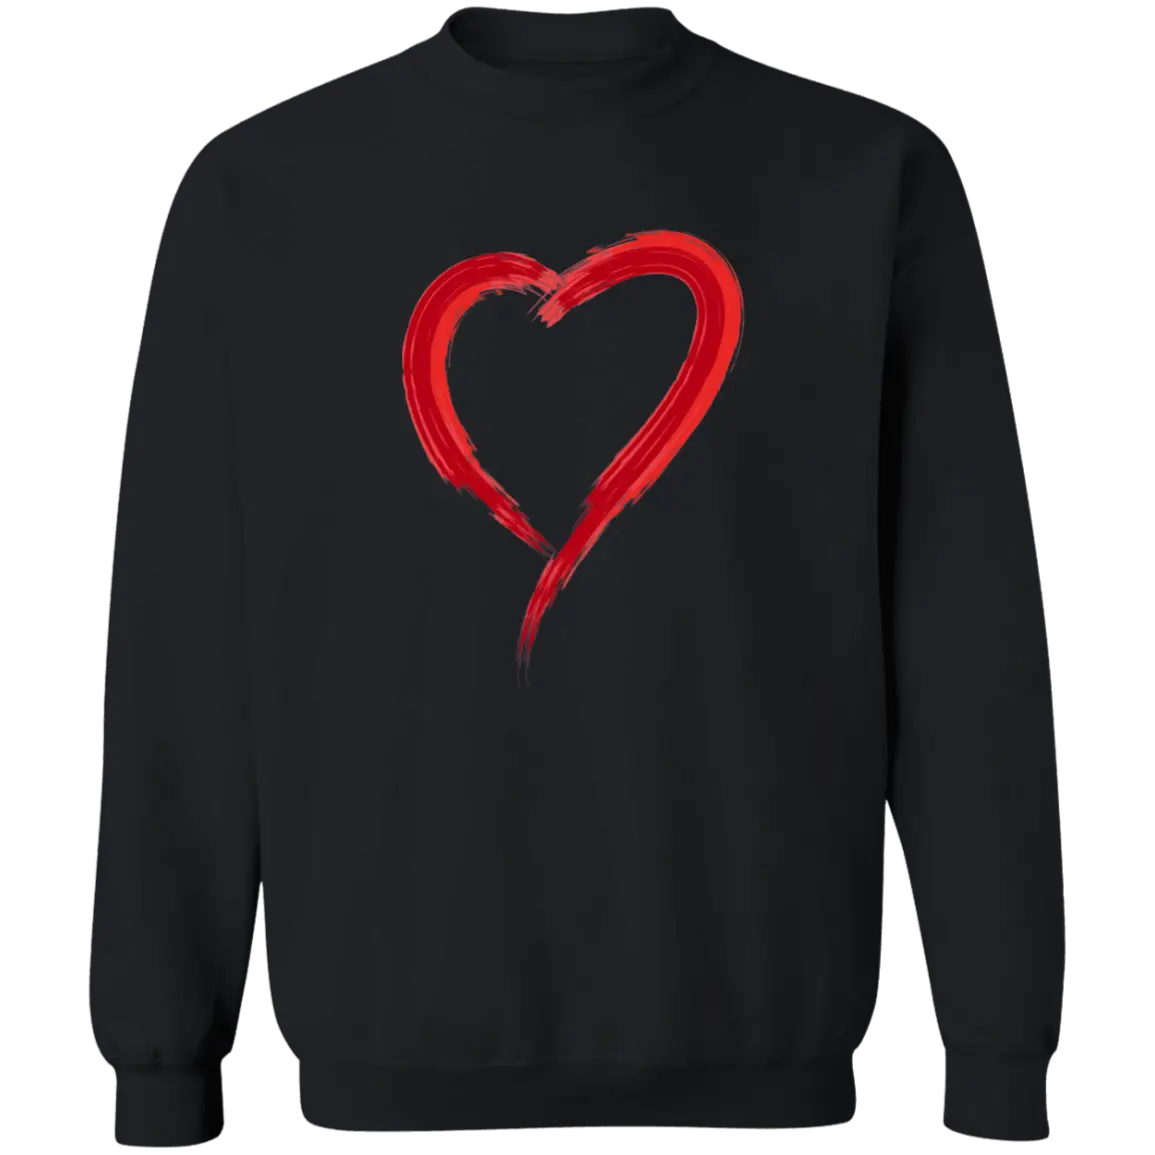 Paintbrush Heart Crewneck Pullover Sweatshirt - Sweatshirts Black / M Real Domain Streetwear Real Domain Streetwear